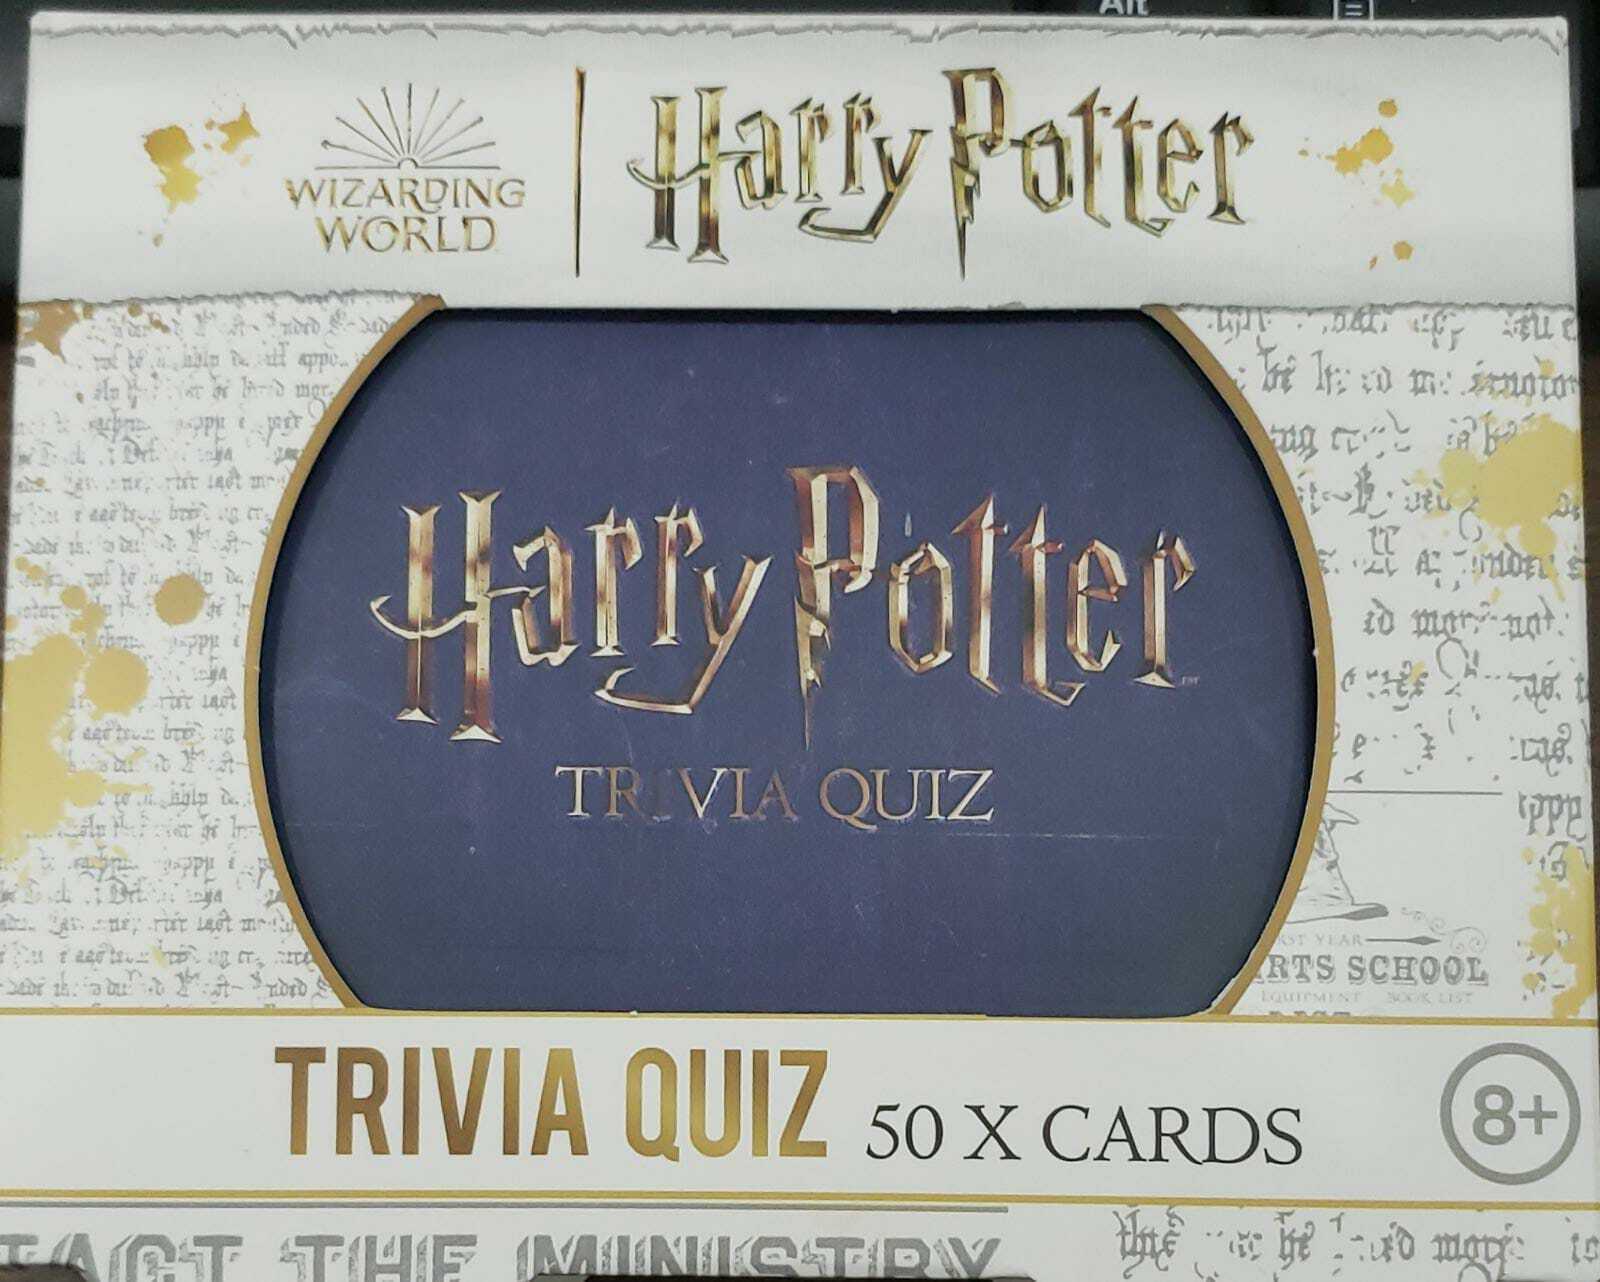 Harry Potter Hogwarts Trivia Quiz Game - 200 Questions